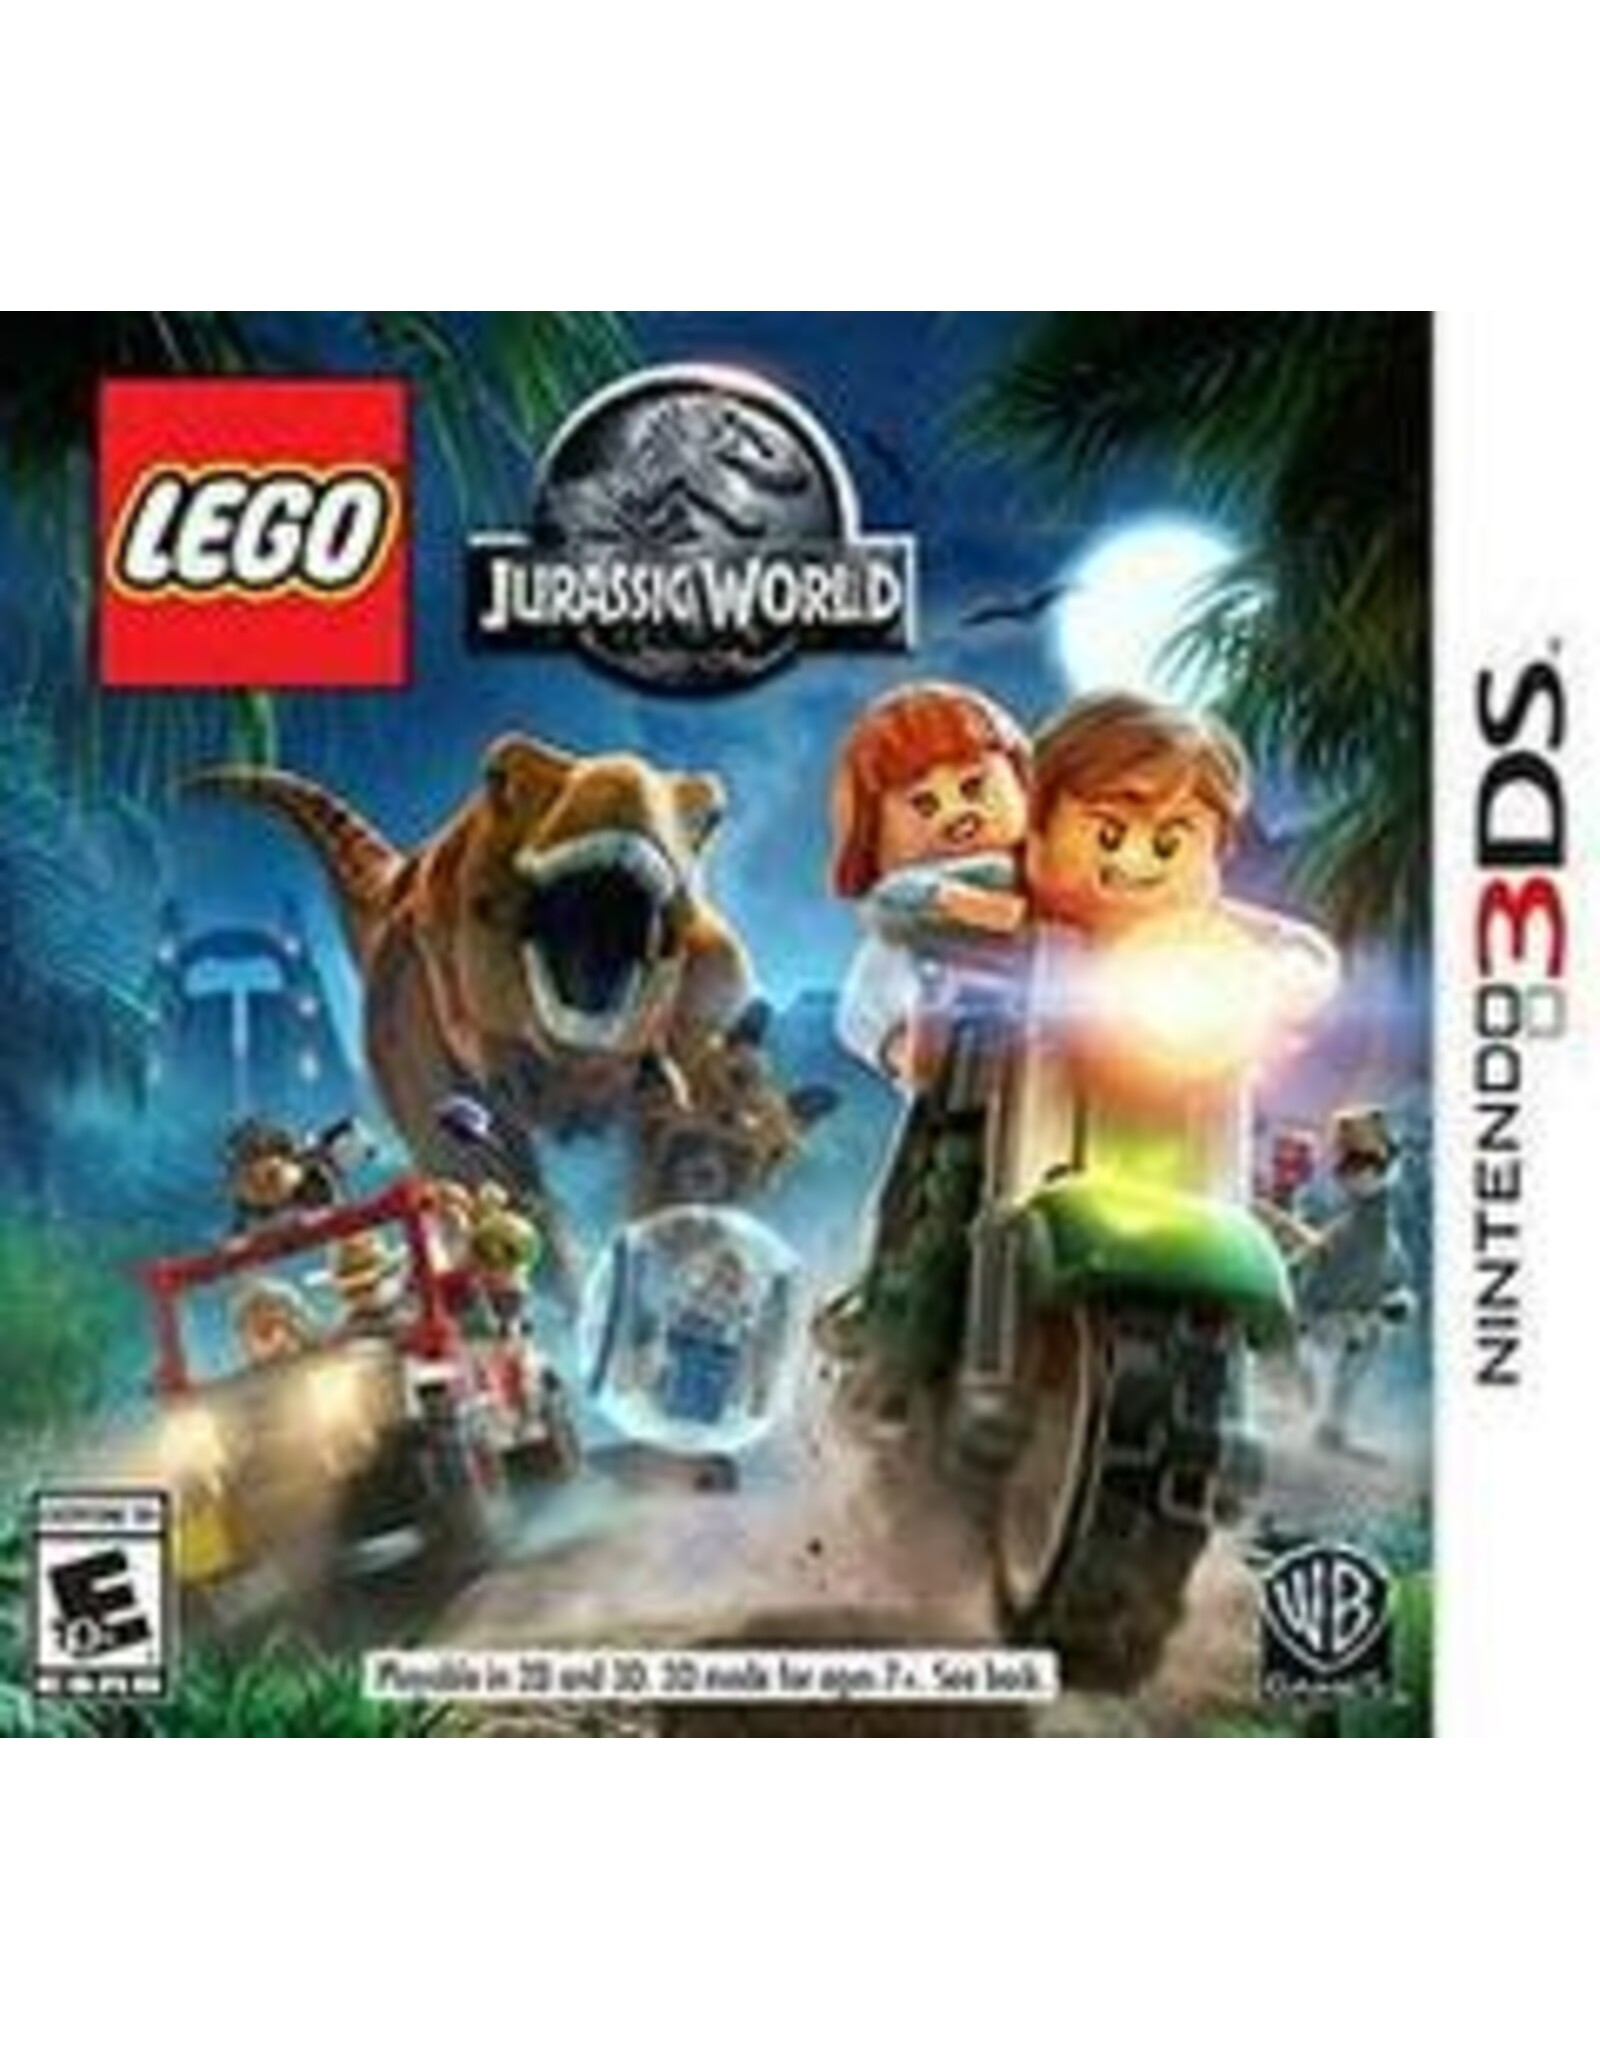 Nintendo 3DS LEGO Jurassic World (No Manual)